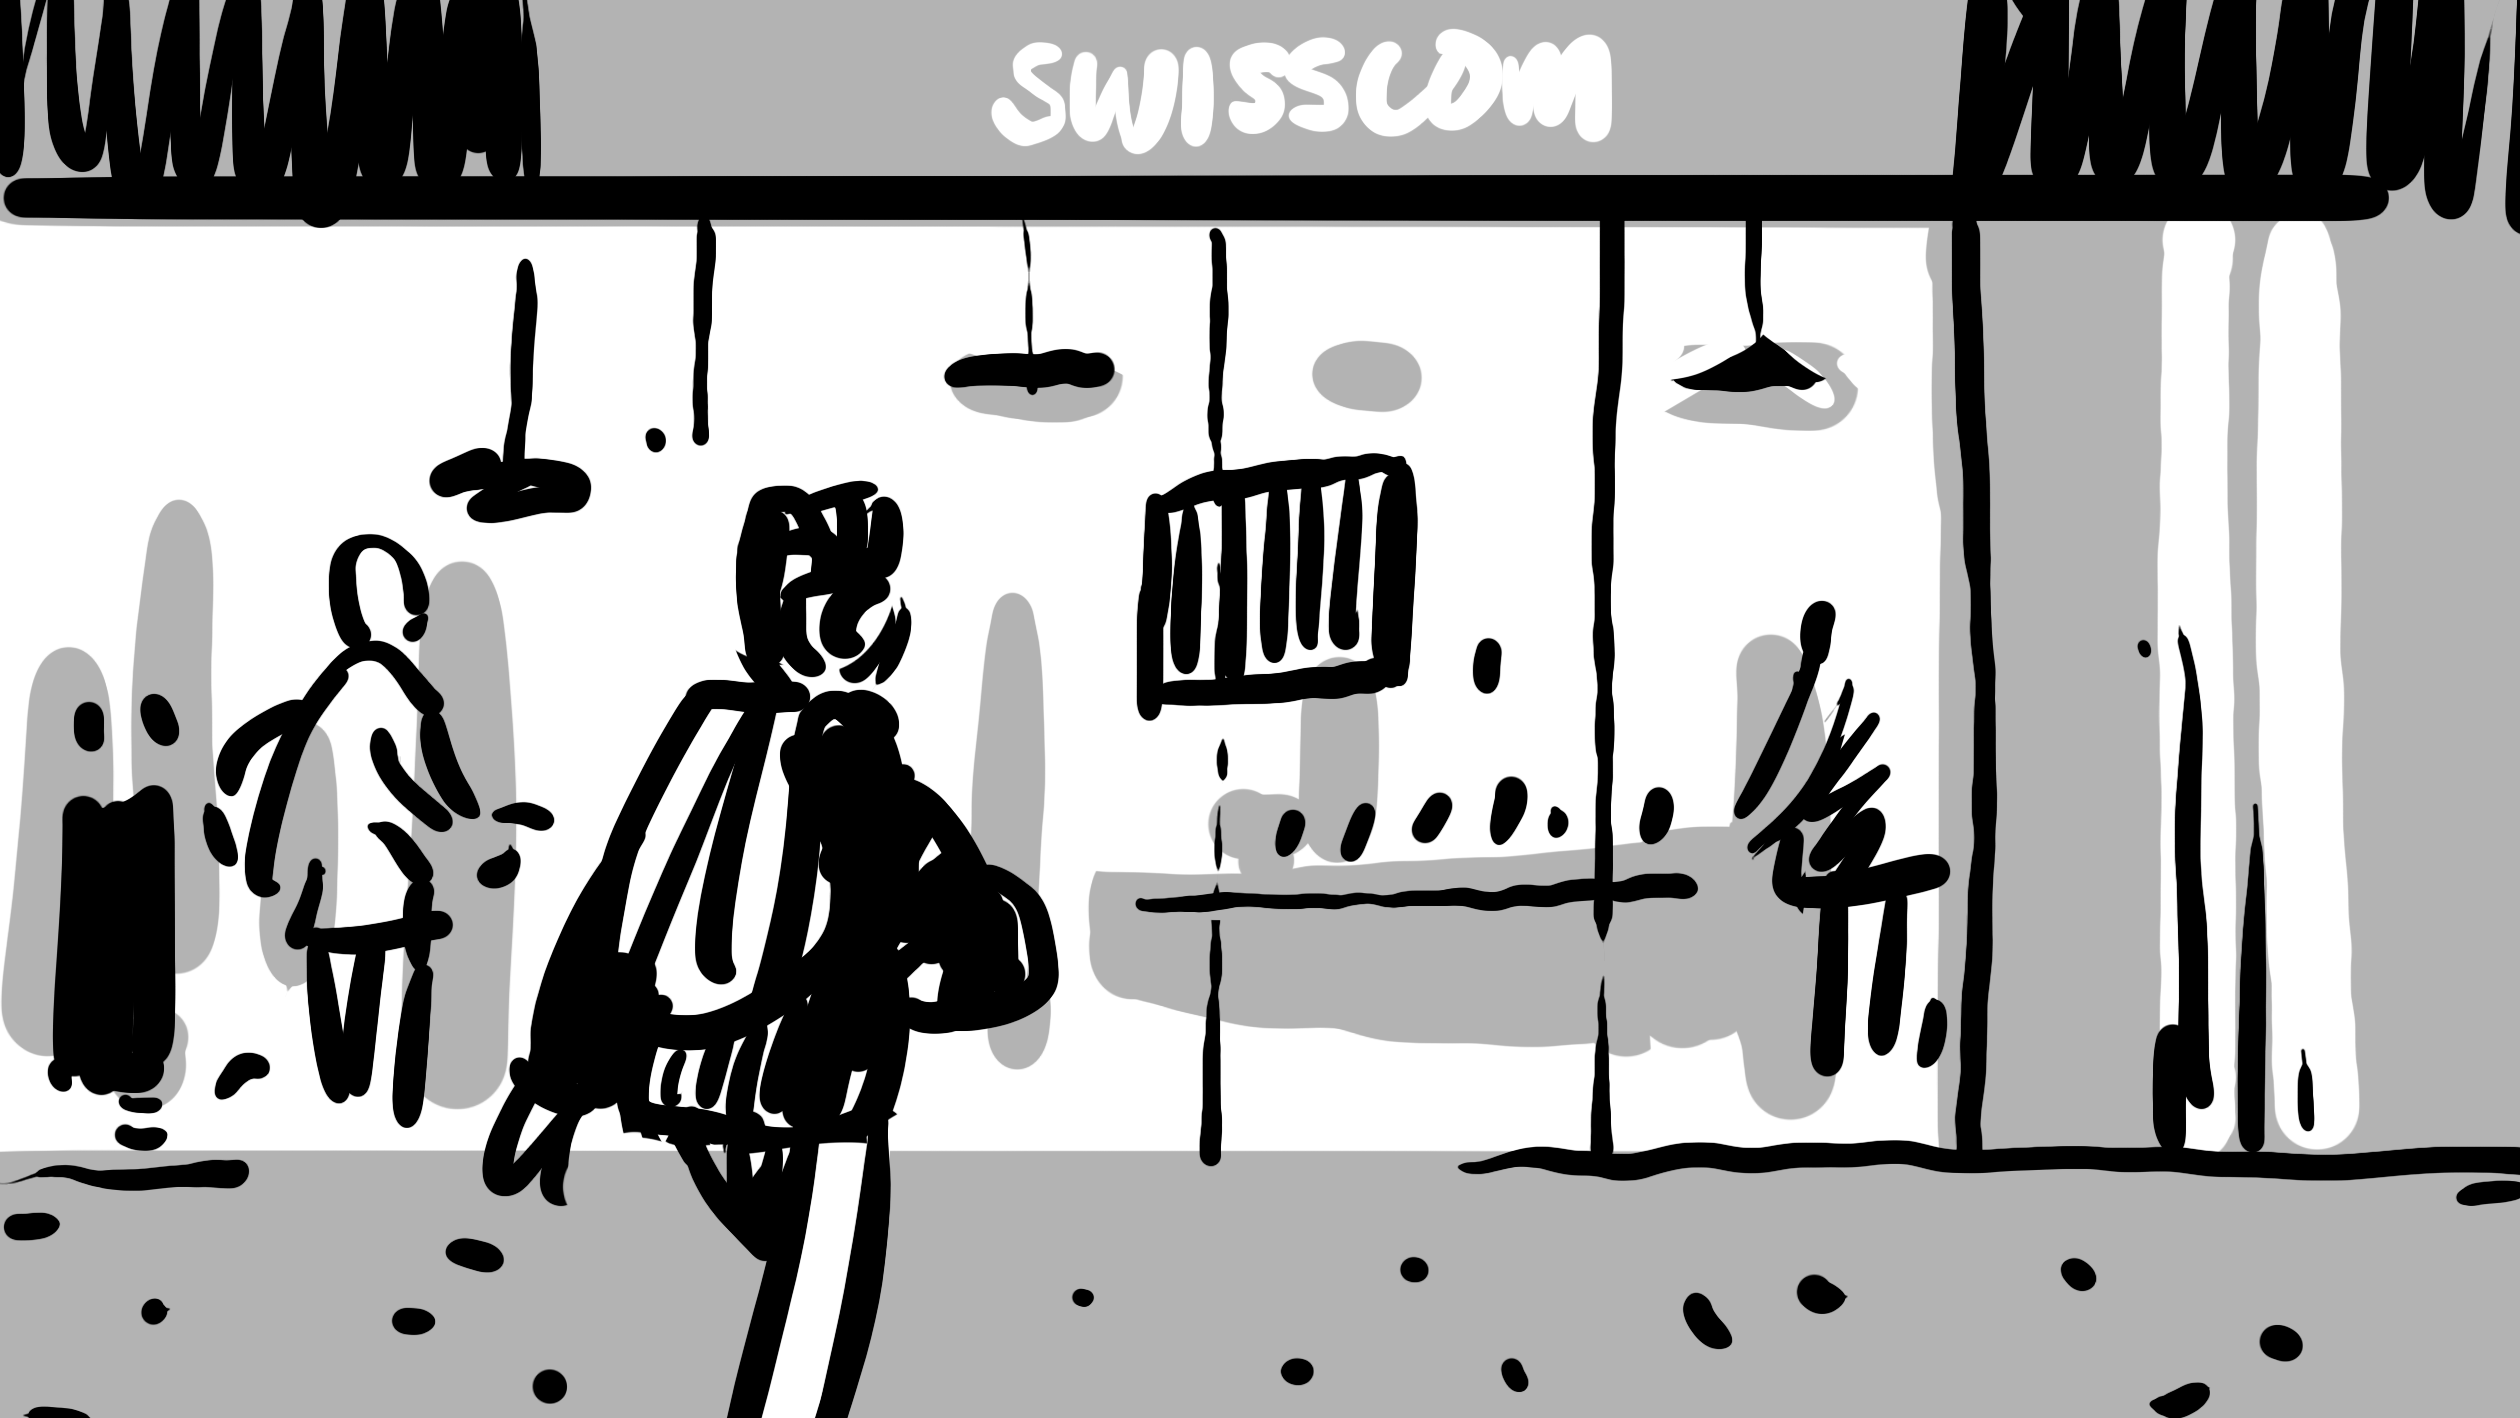 Bild aus Storyboard, Person kommt zum Swisscomshop